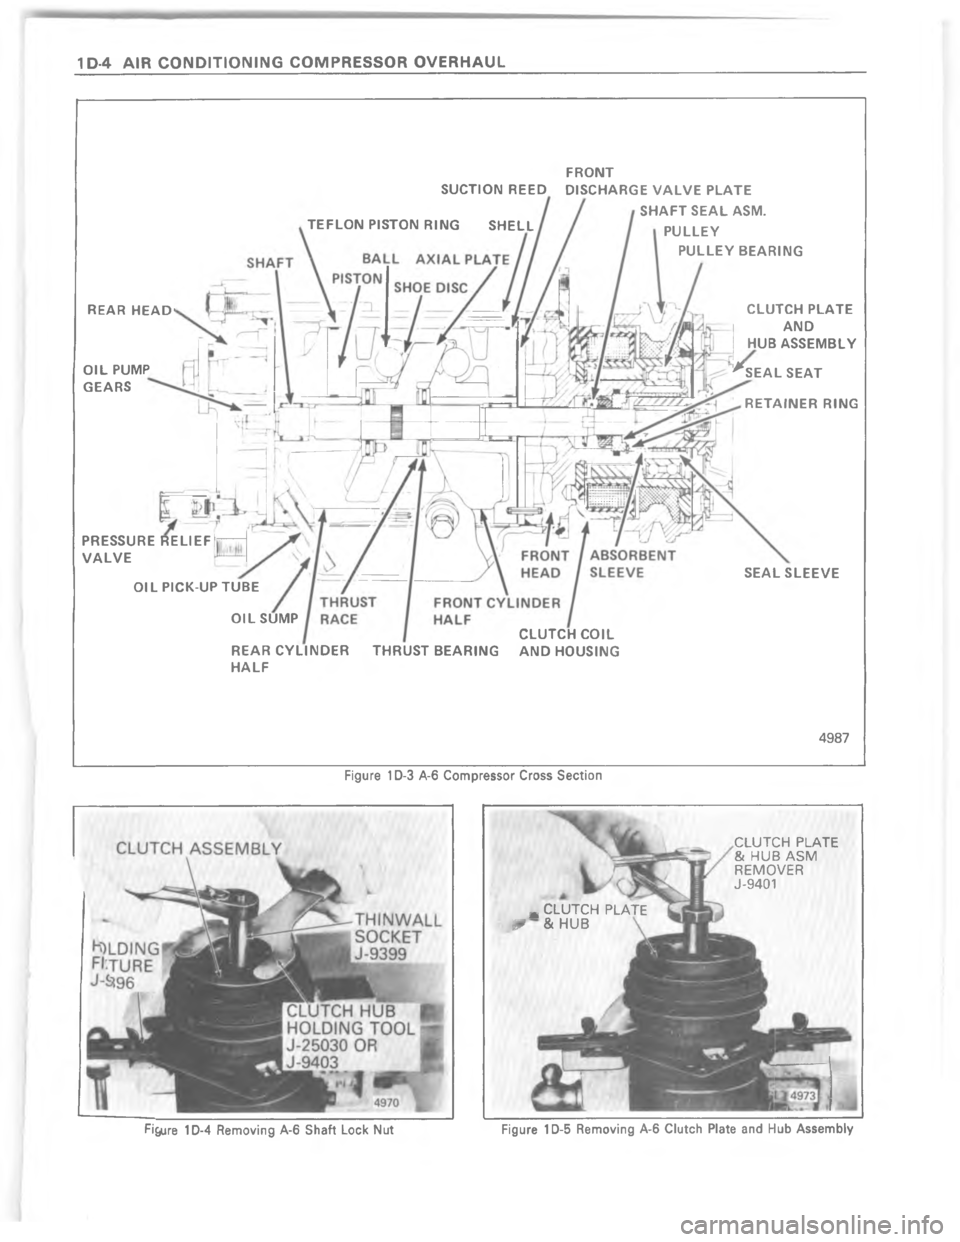 CHEVROLET LIGHT DUTY TRUCK 1980  Repair Everhaul Manual Downloaded from www.Manualslib.com manuals search engine  ?  	    !    	
   	                            	 
   ! 	     